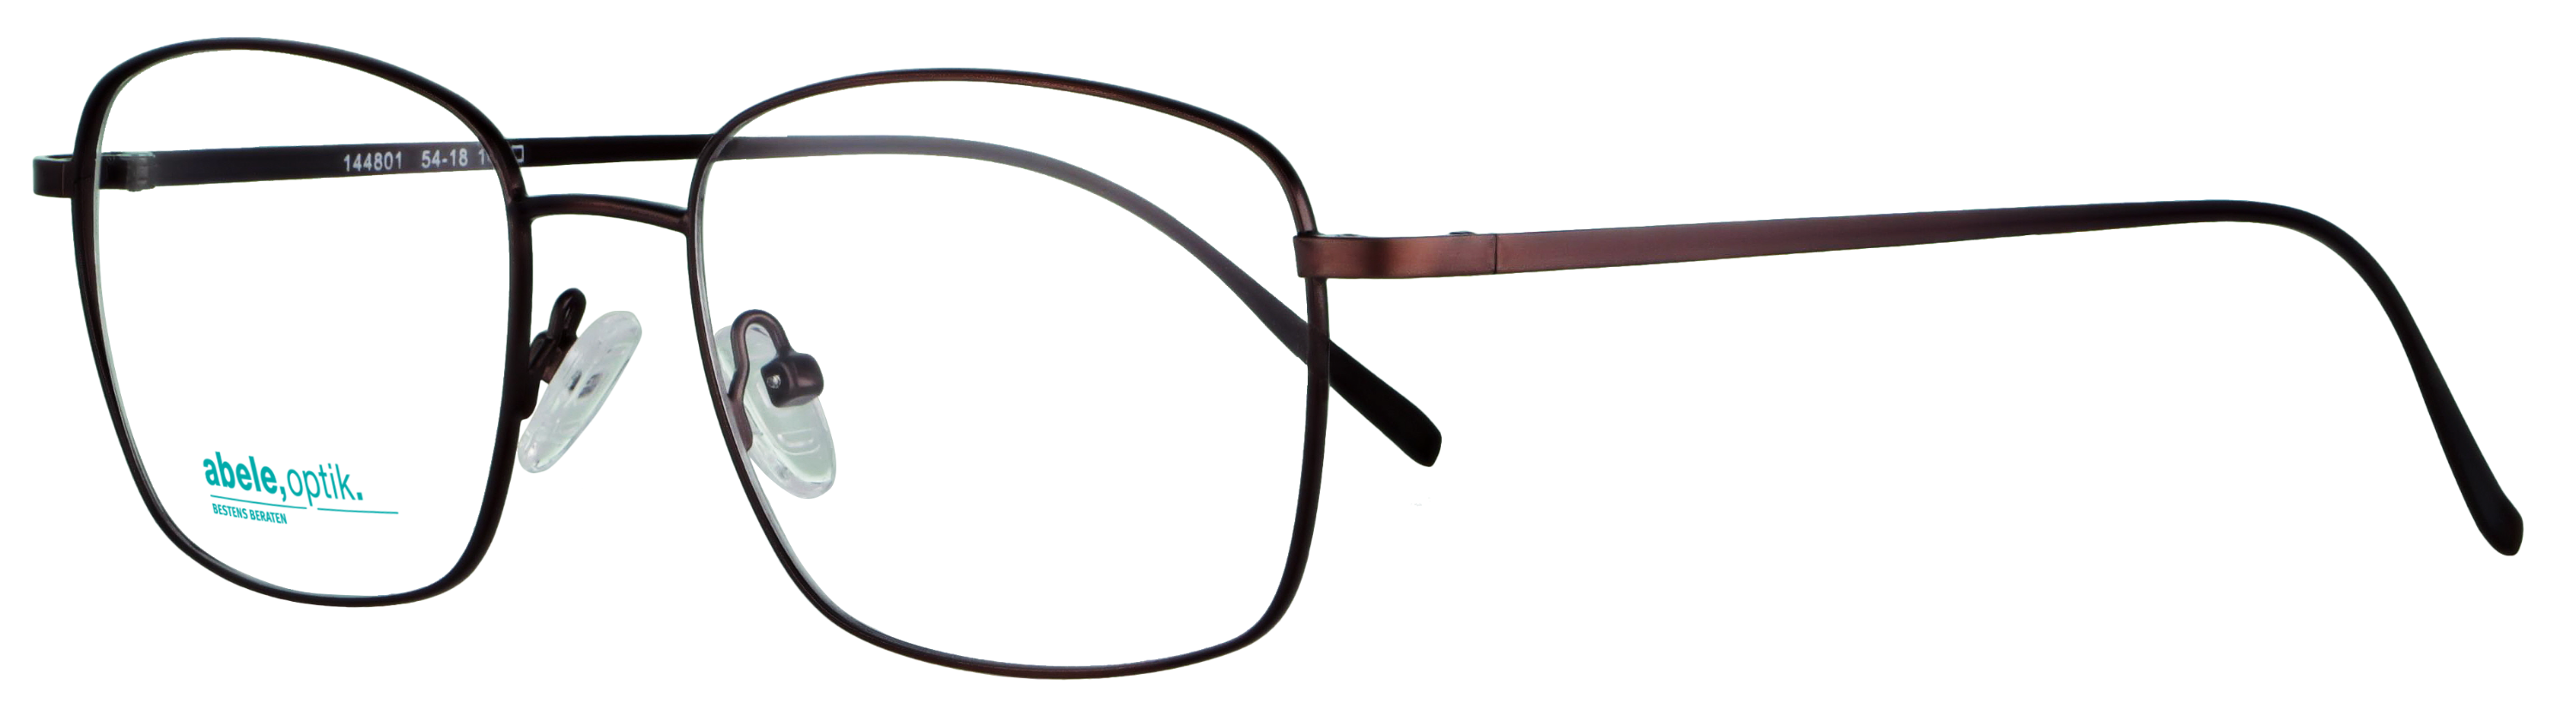 Eyezen Angebot - abele optik Brille 144801